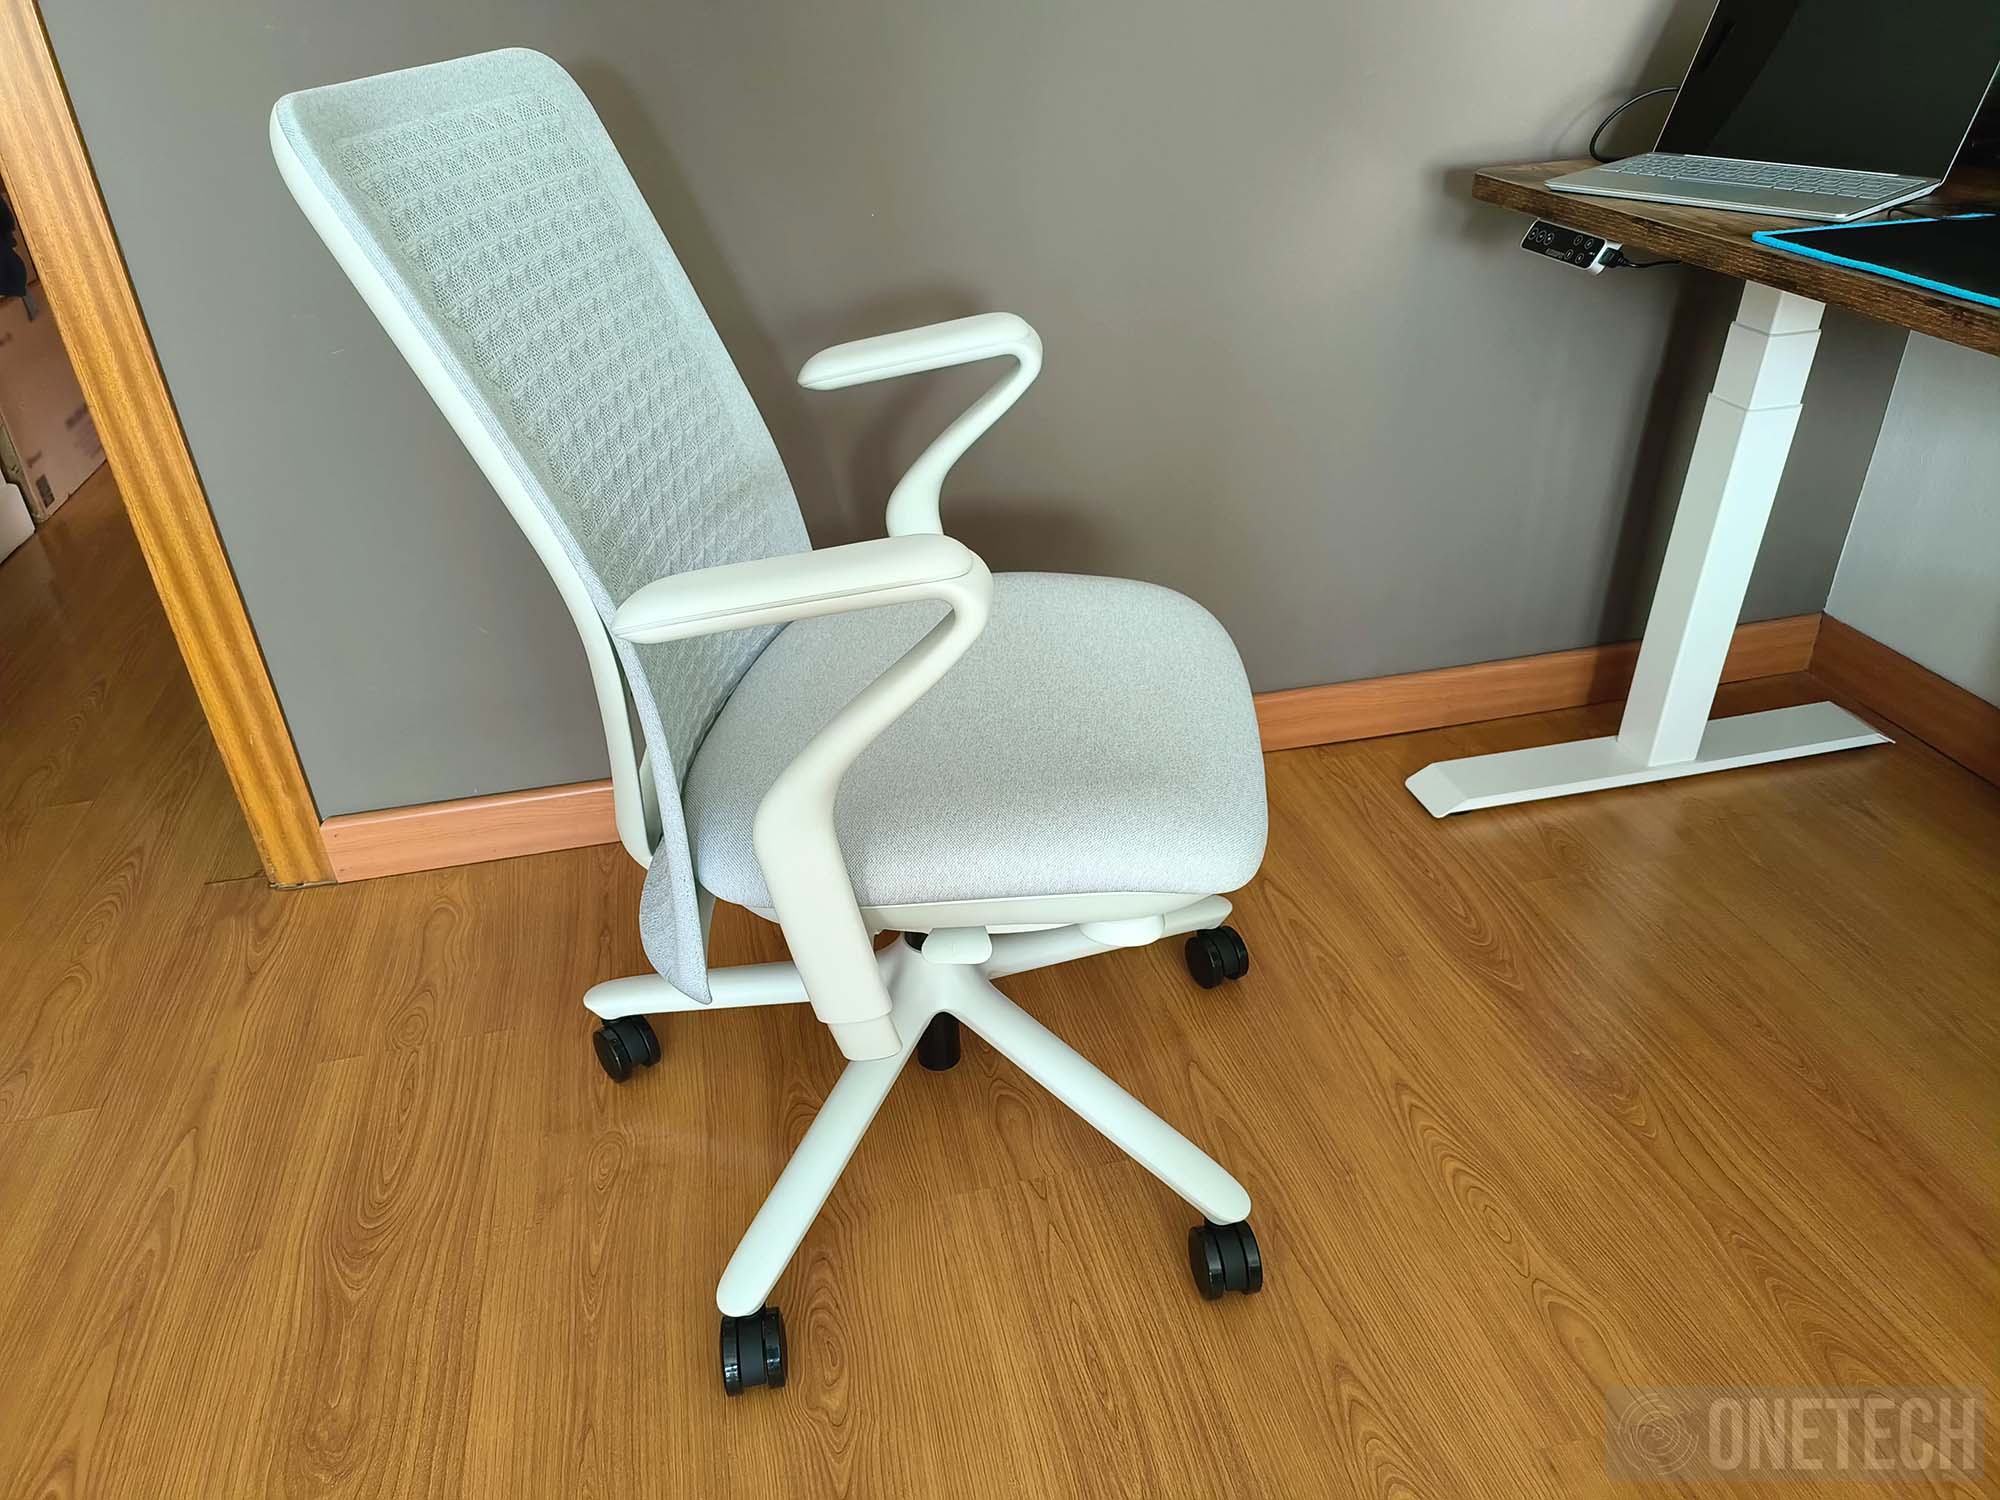 Flexispot BS13, ponemos a prueba esta silla ergonómica premium - Análisis 9